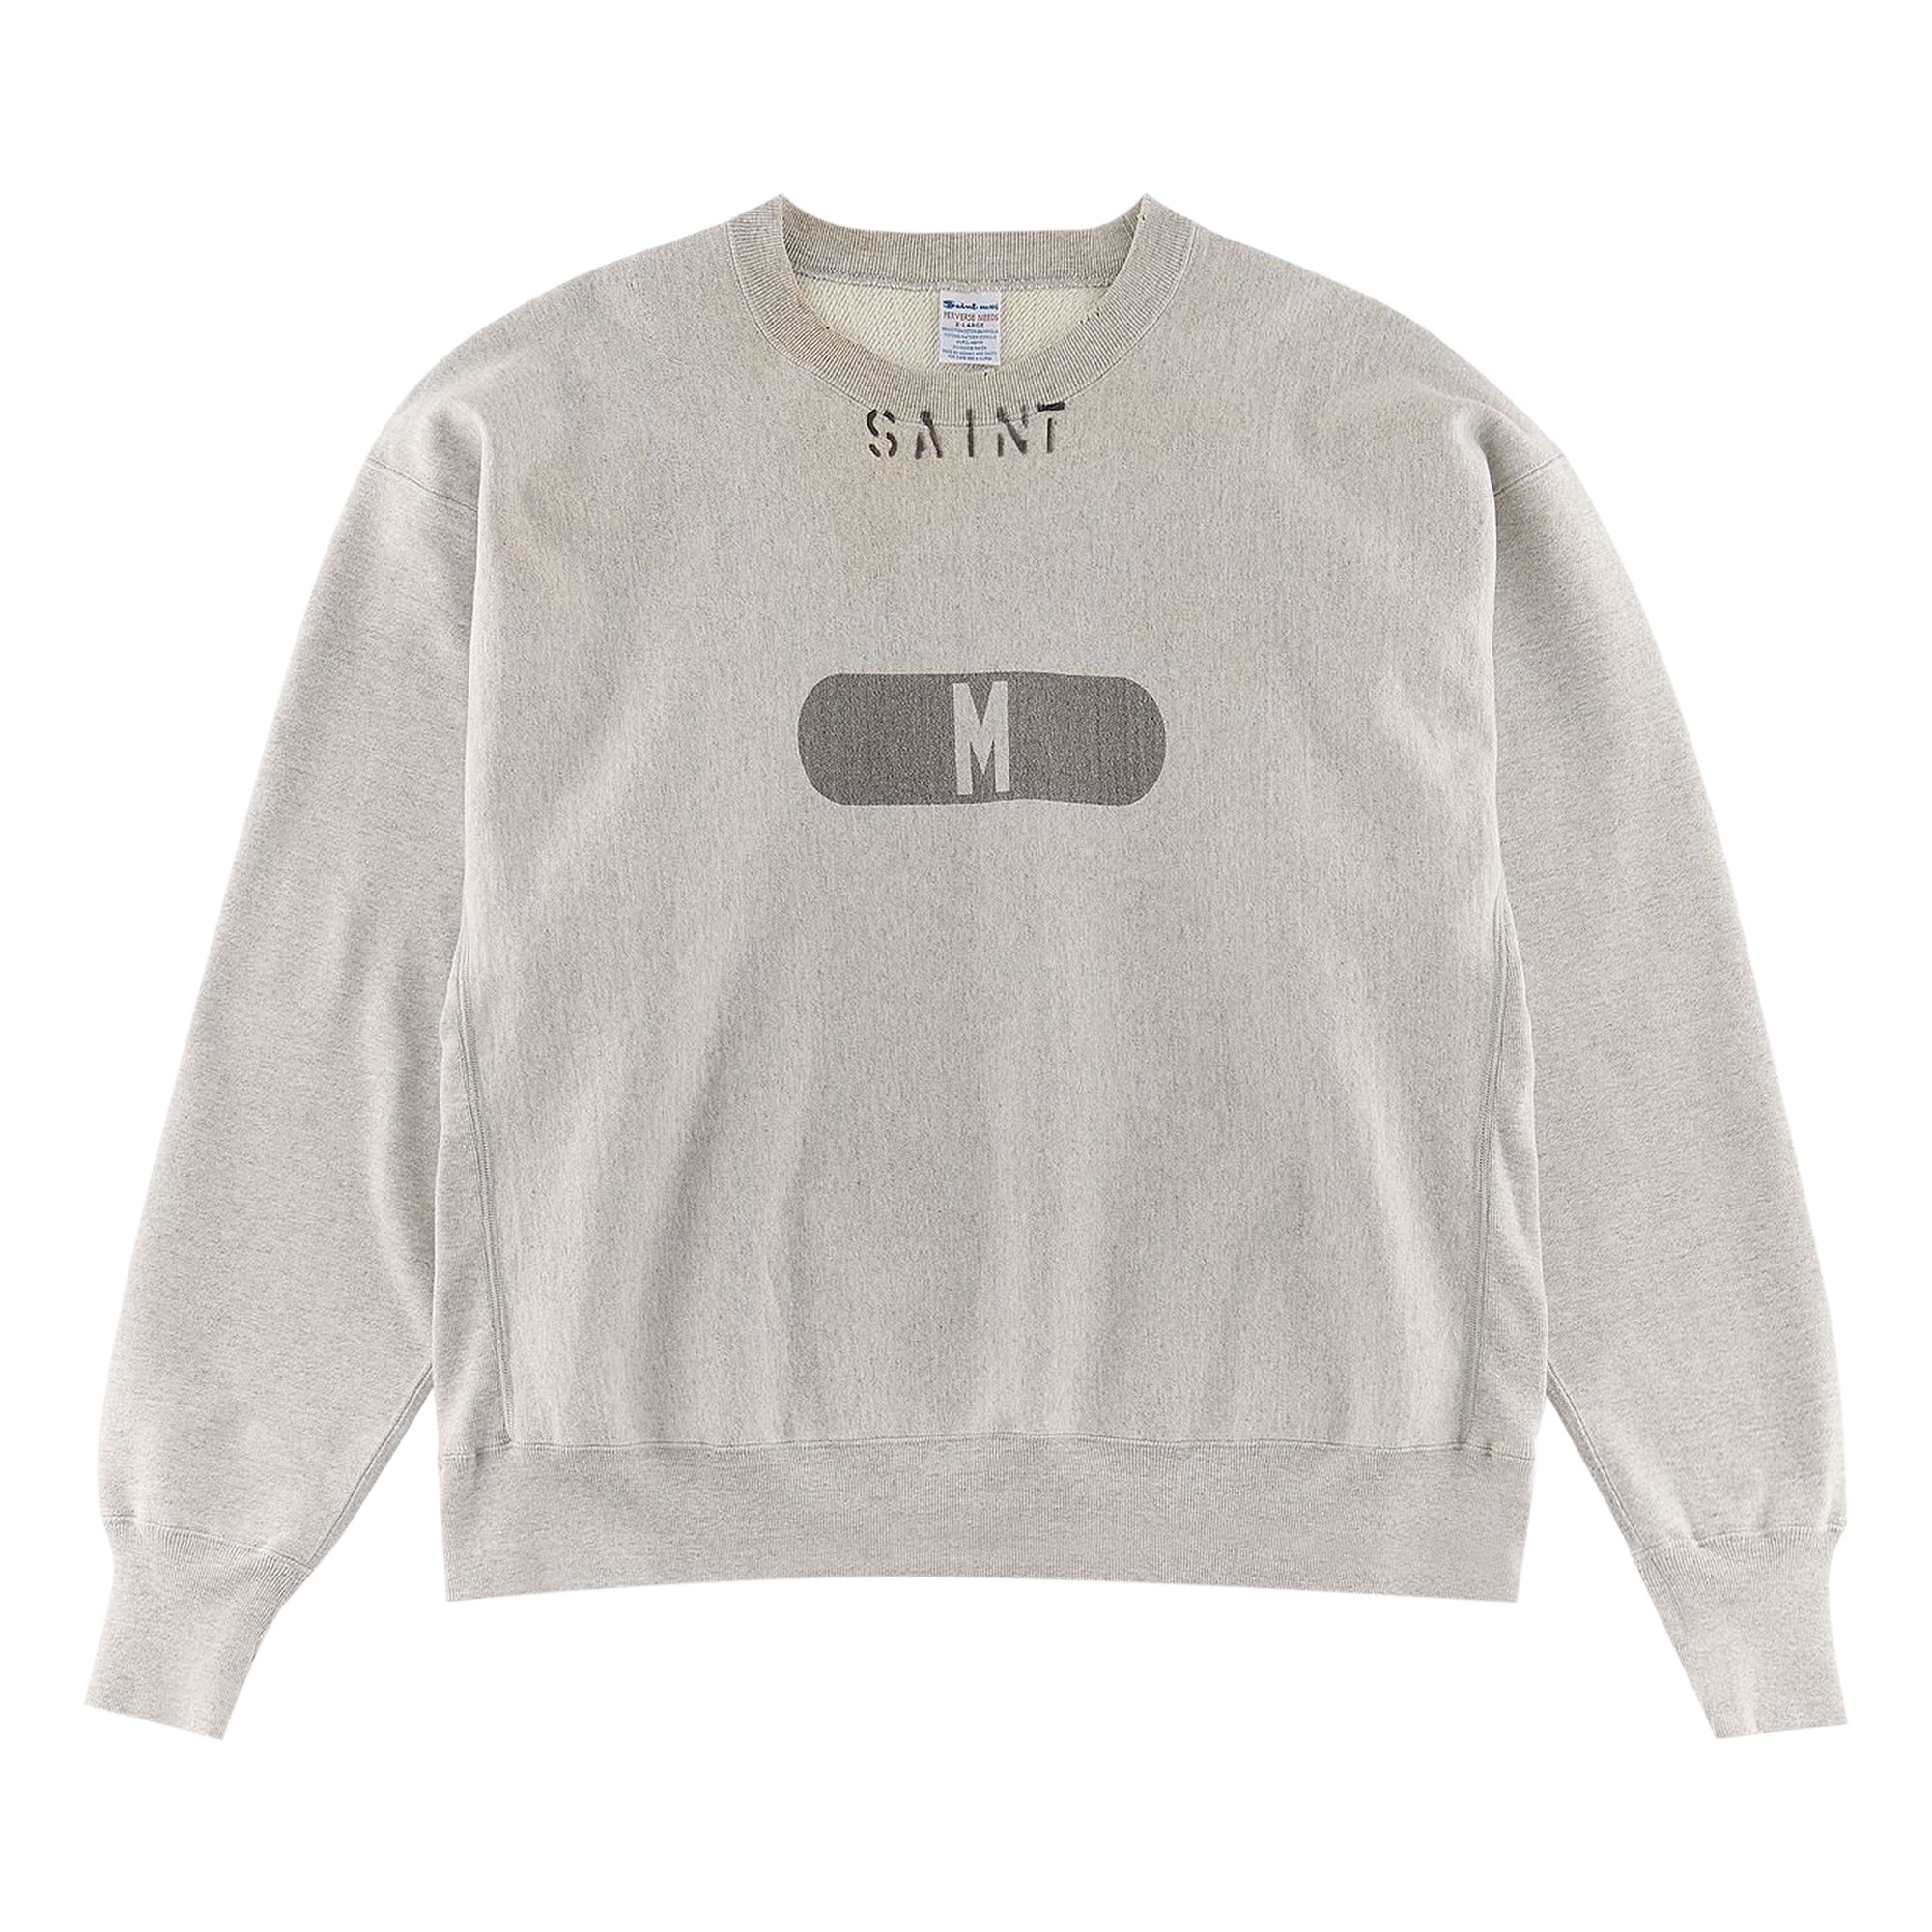 Buy Saint Michael Crewneck Sweater 'Grey' - SM S23 0000 043 | GOAT CA